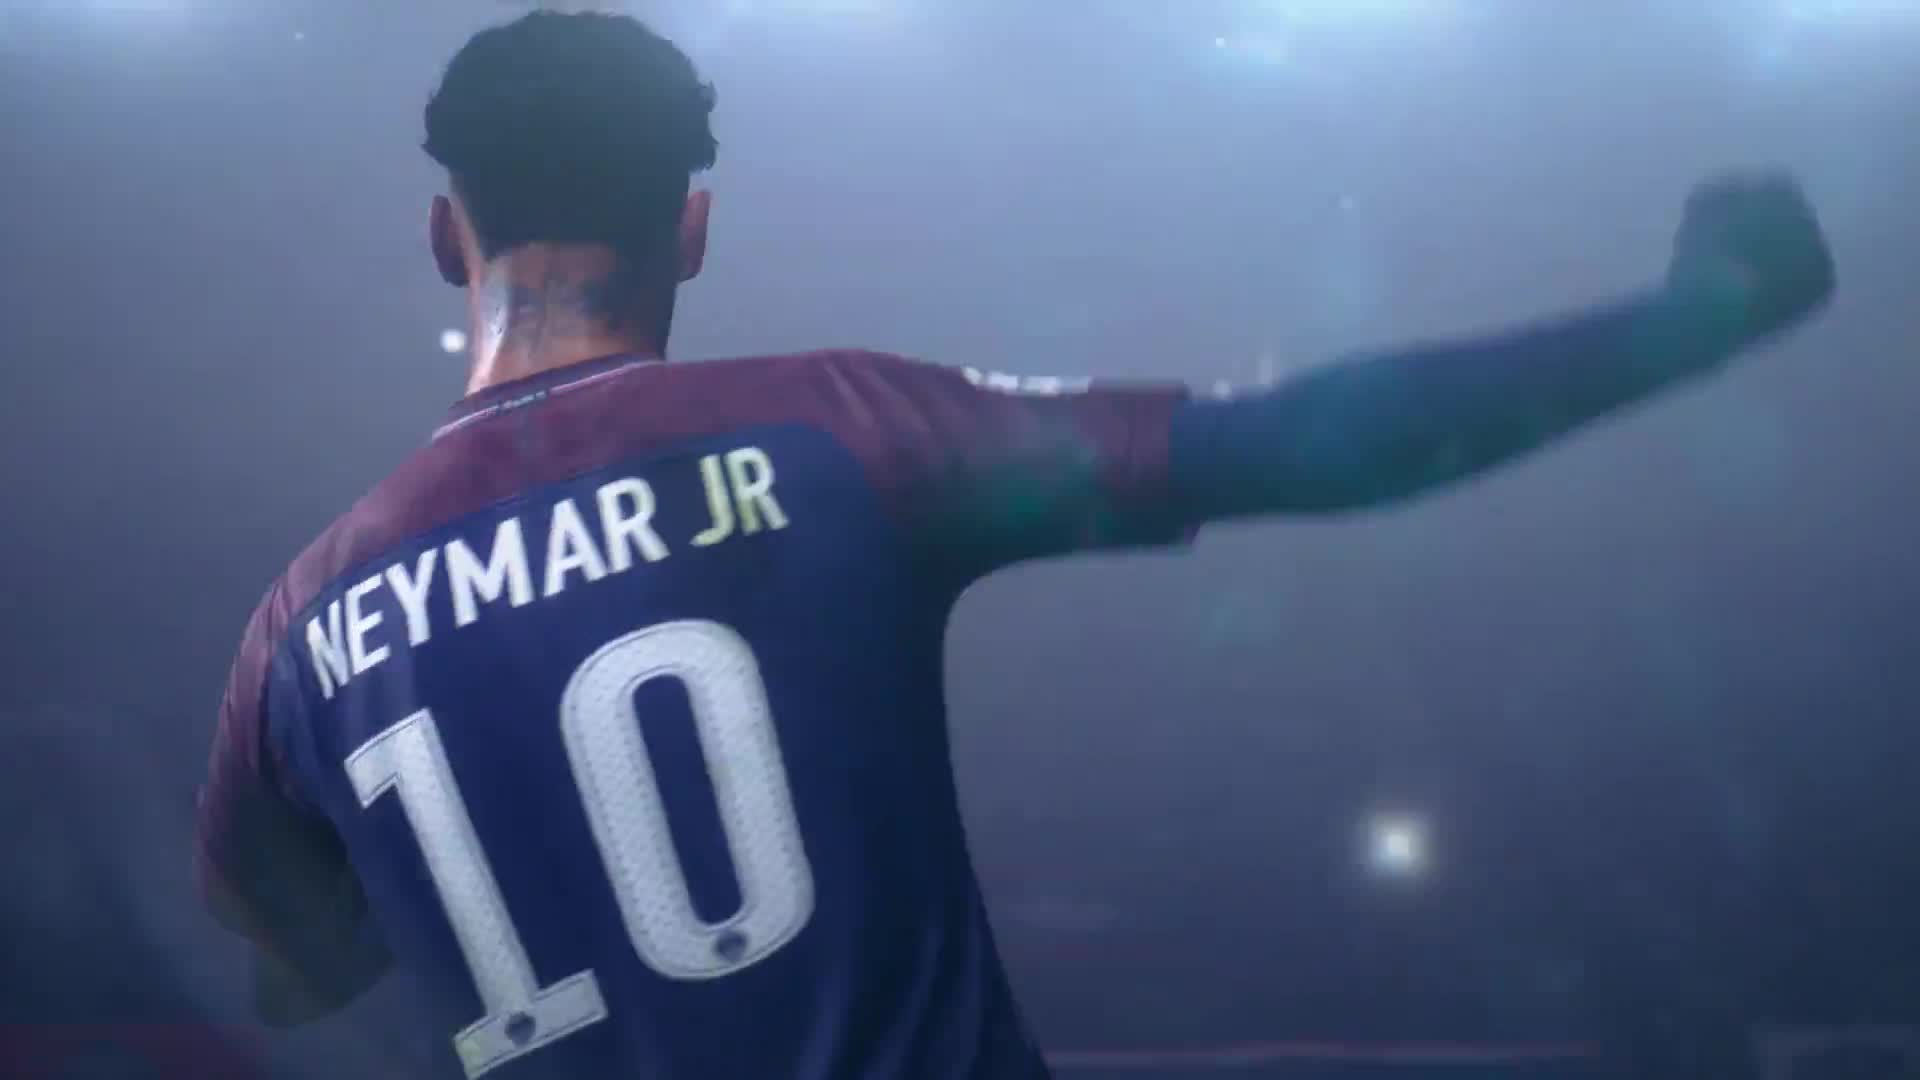 FIFA 19 - Reveal Trailer